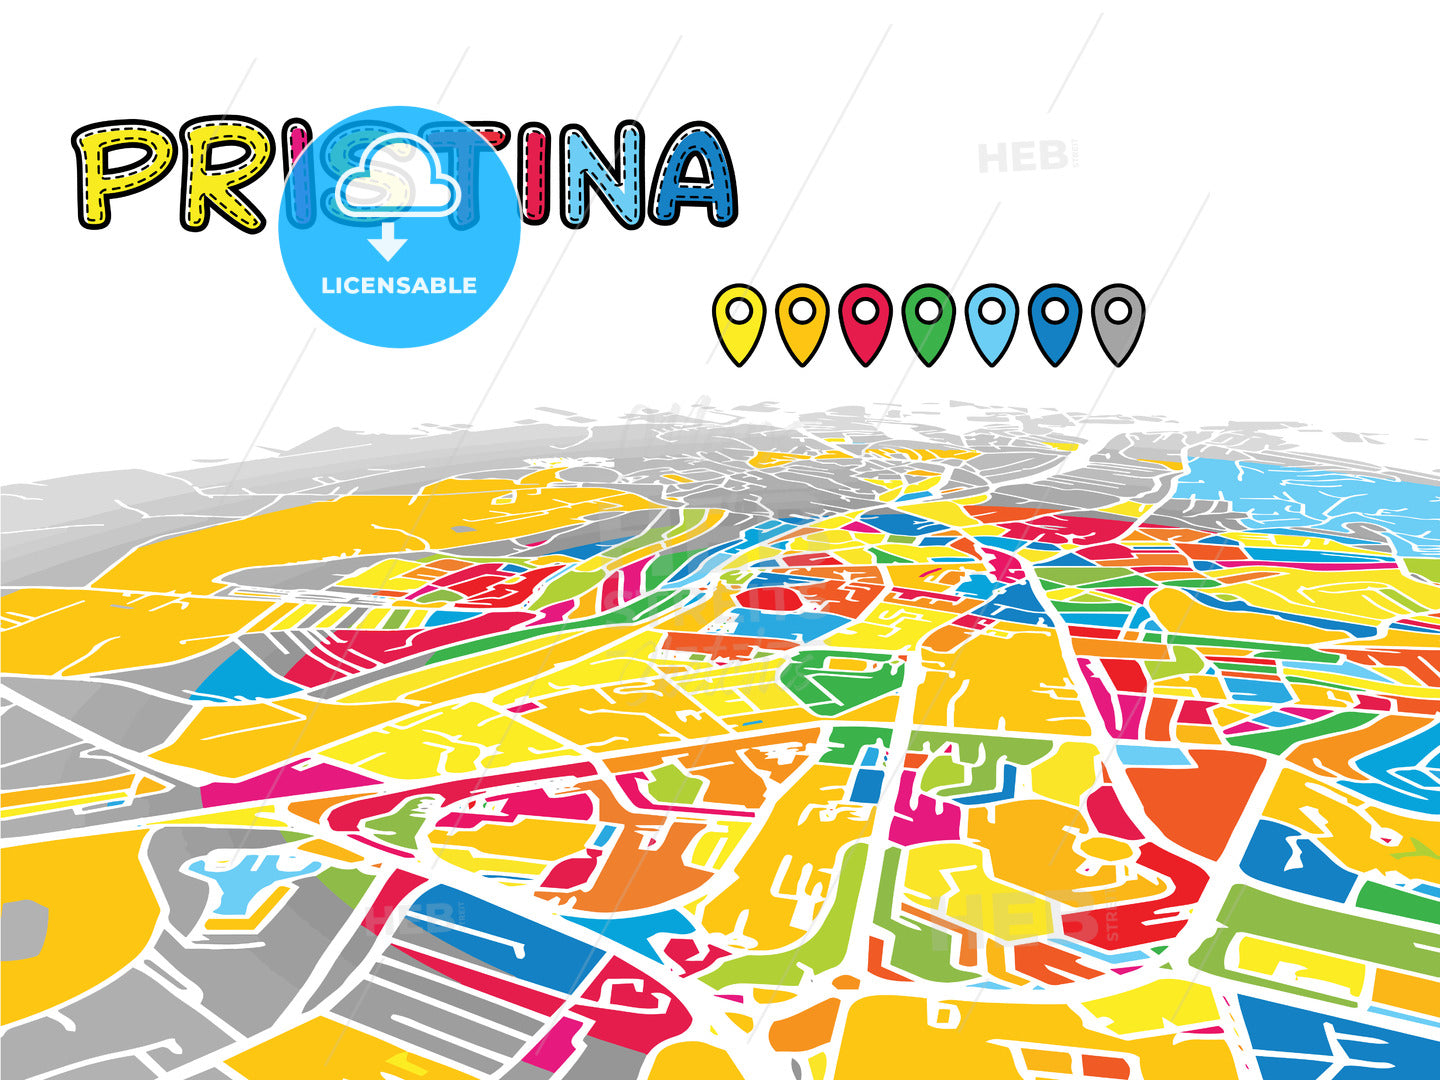 Pristina, Kosovo, downtown map in perspective